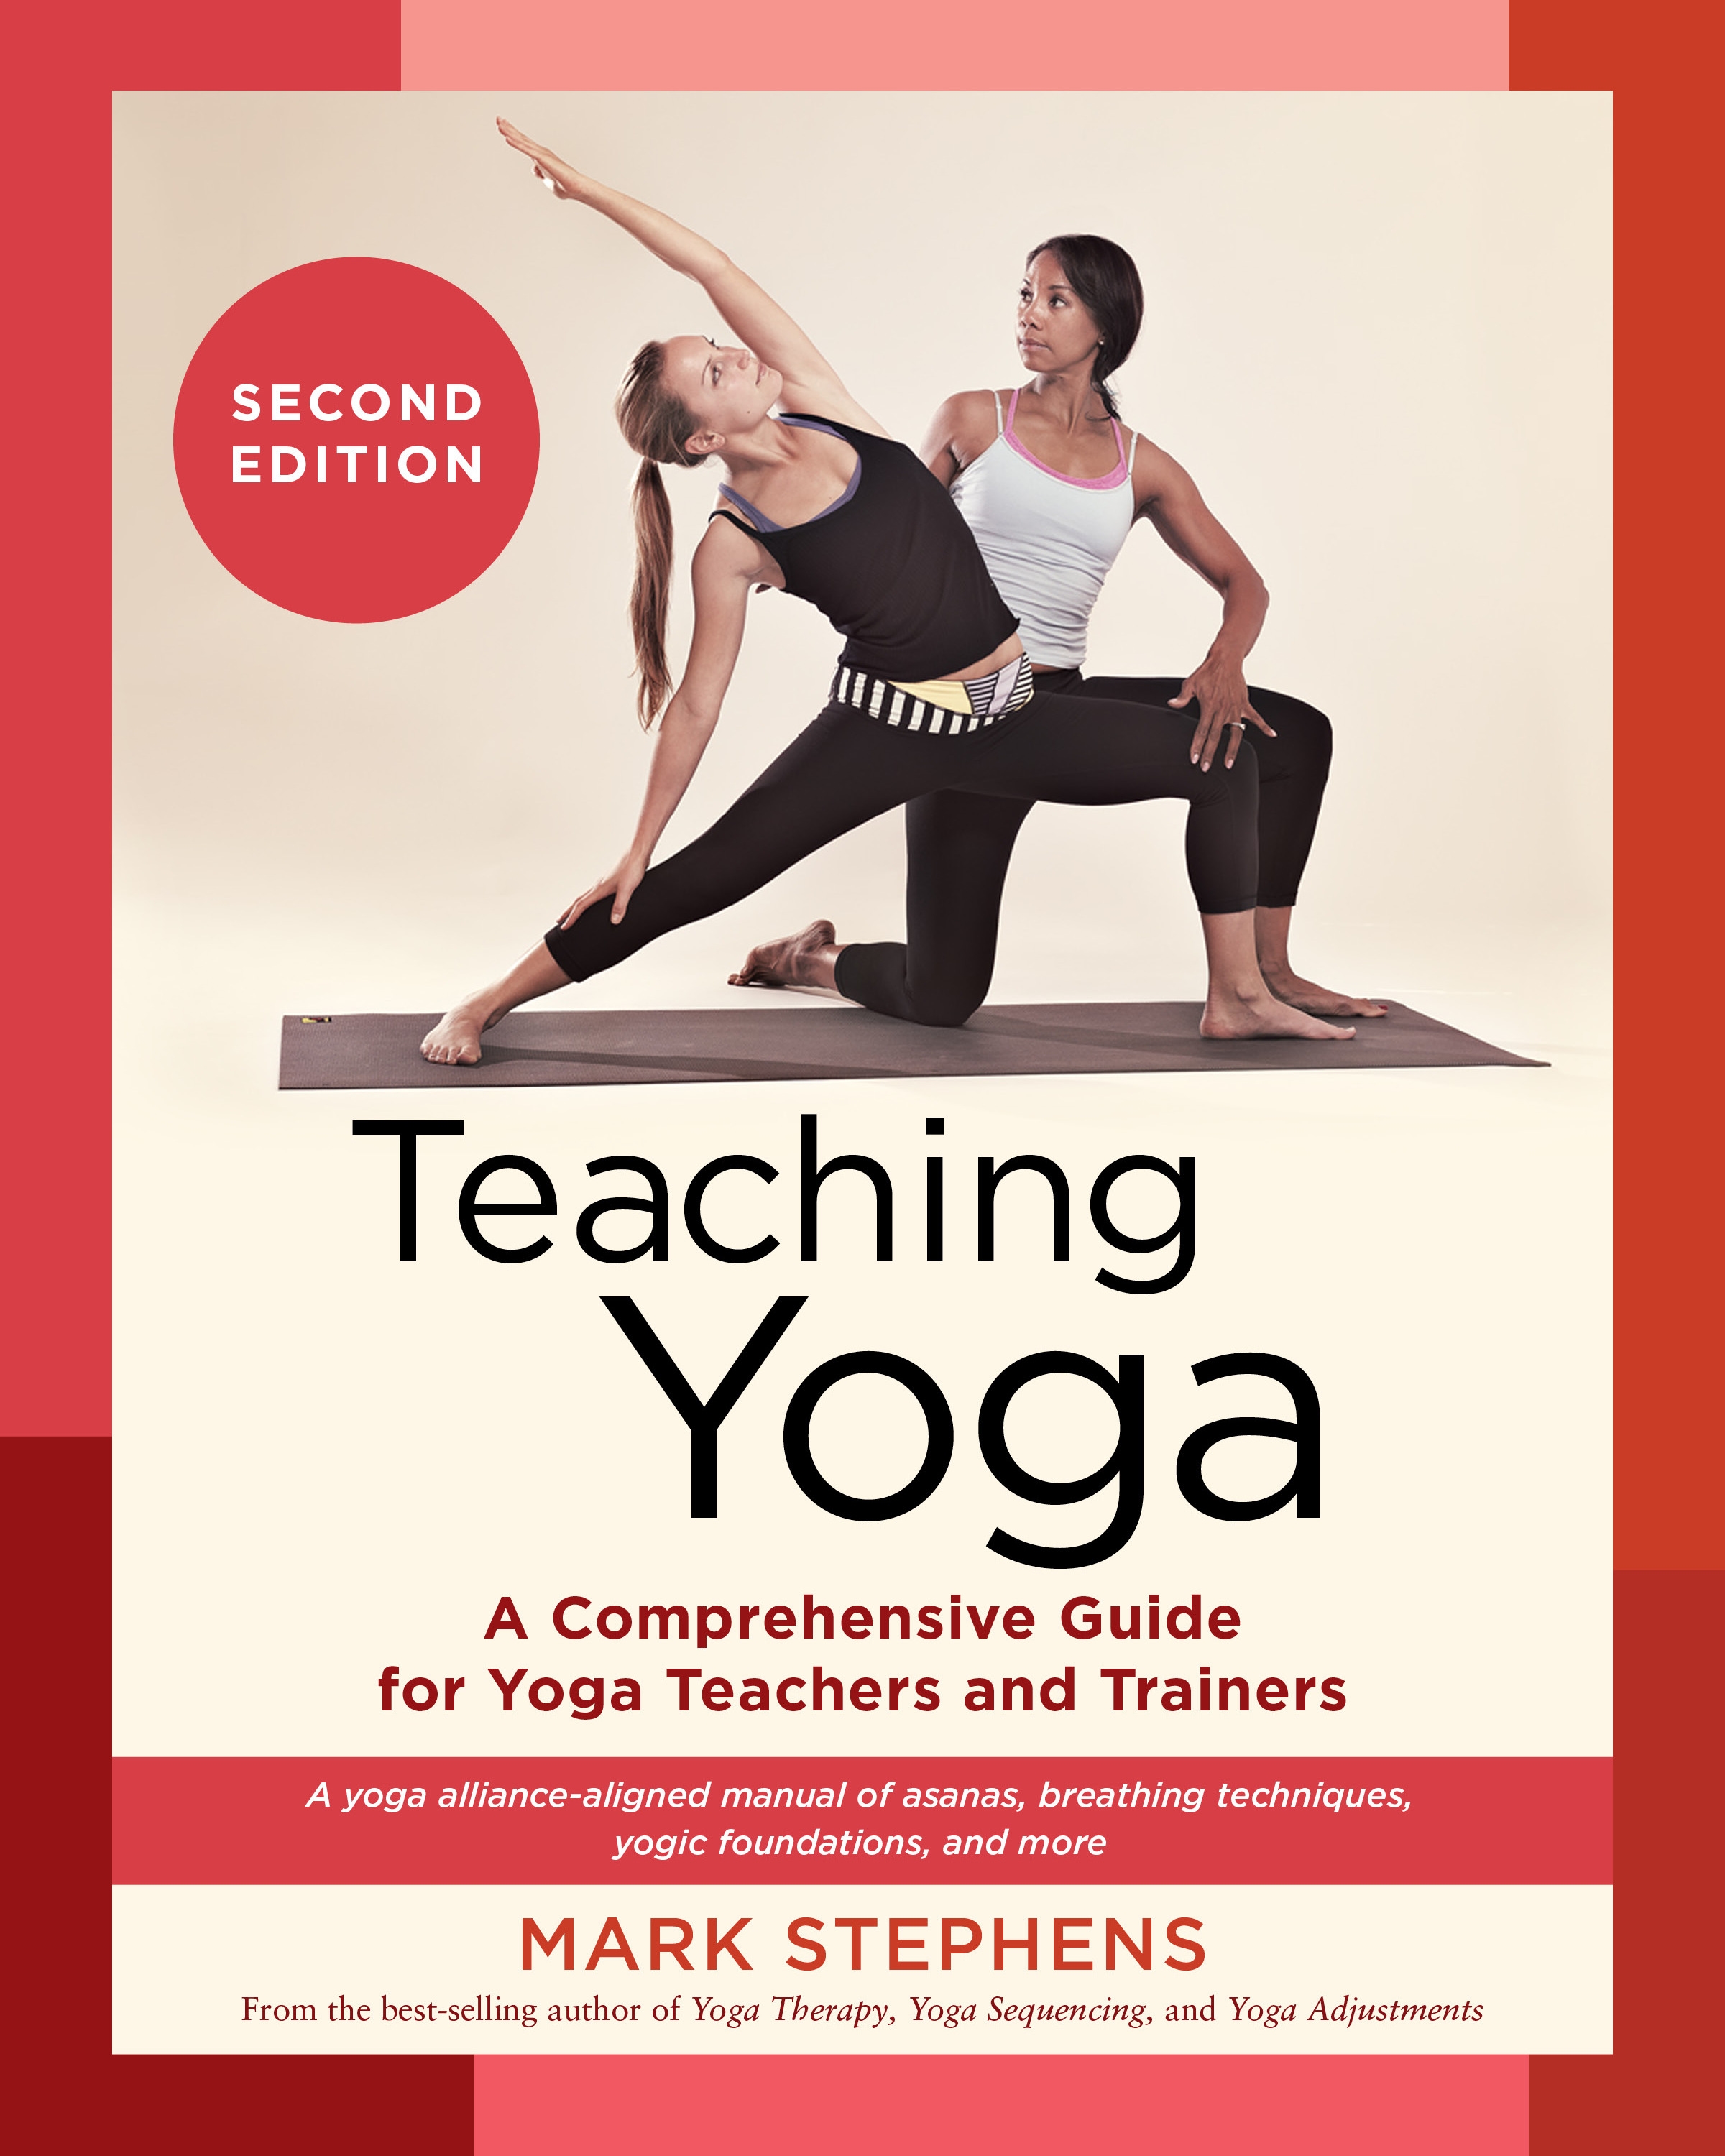 7 Teaching Tips Every Yoga Teacher Should Know - Gaiam